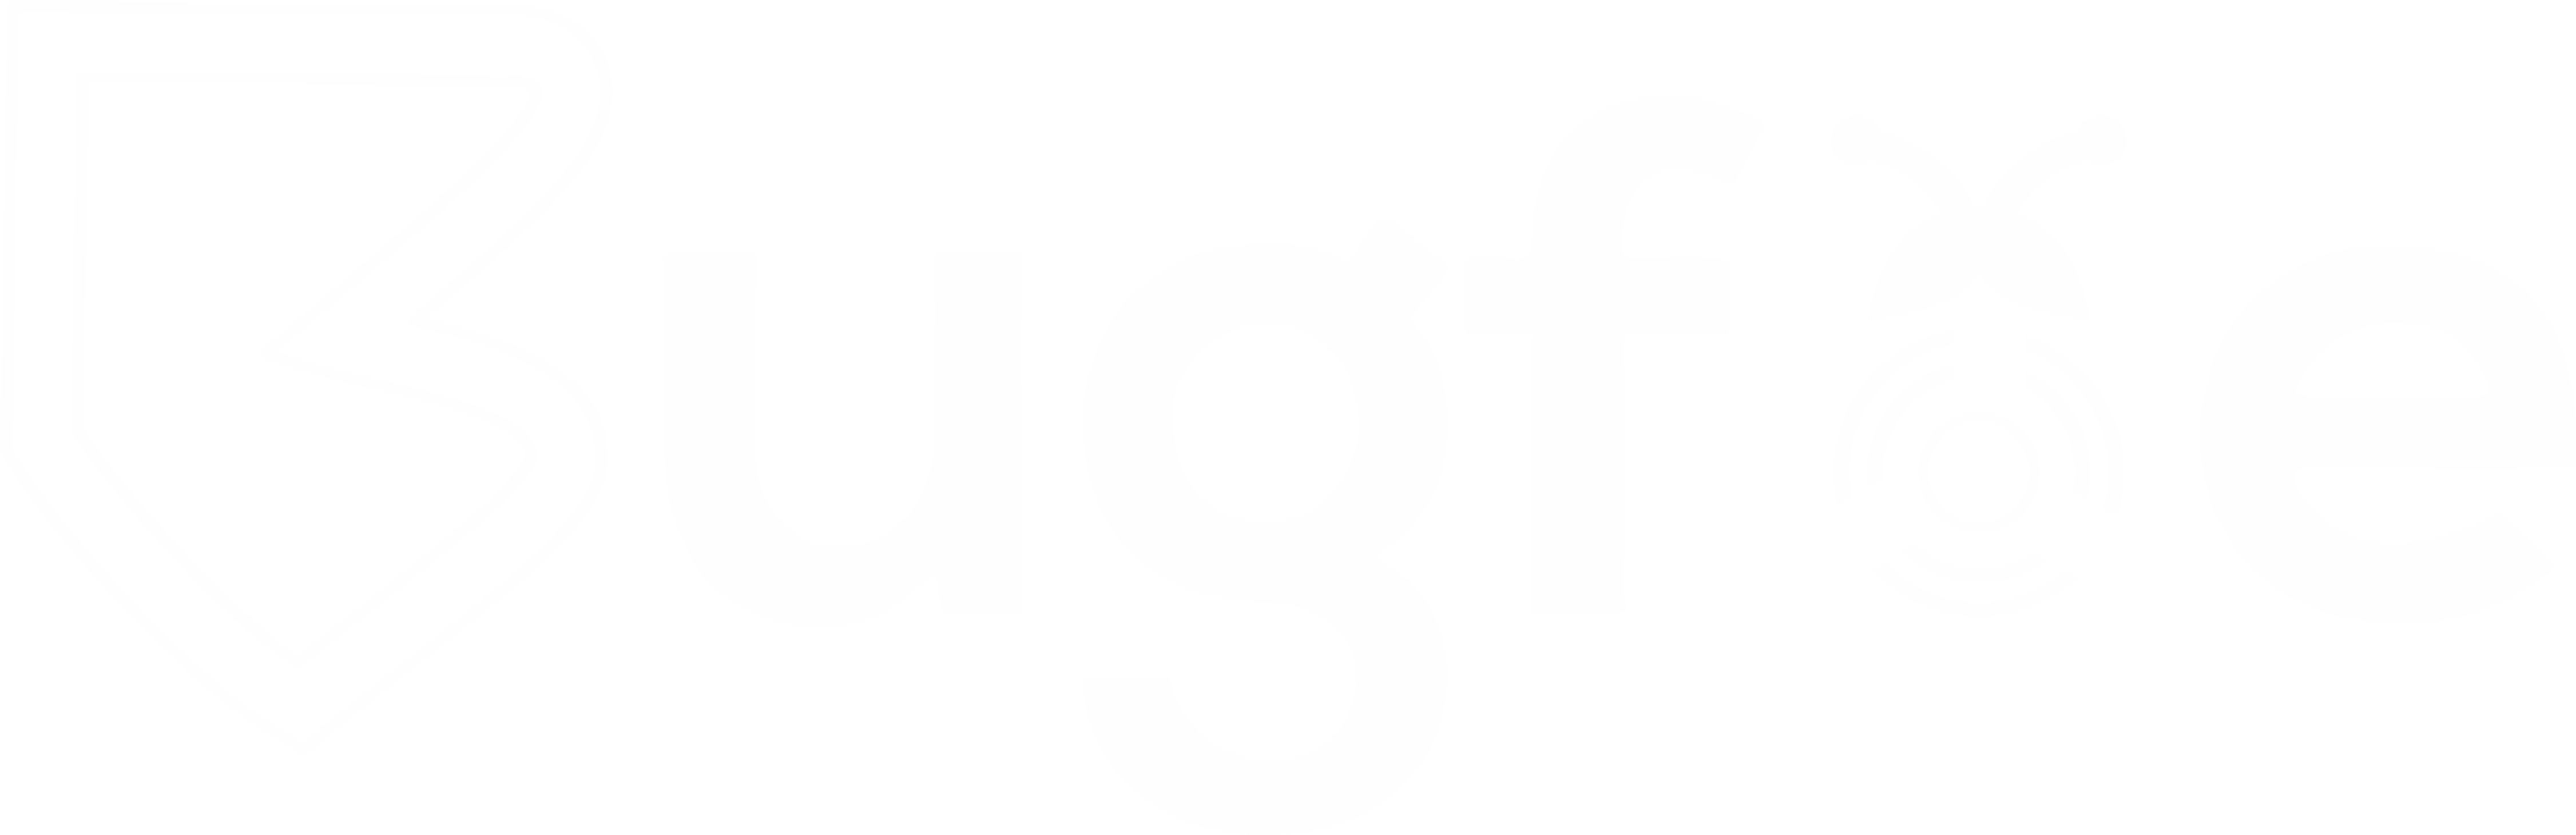 BugFoe Logo header